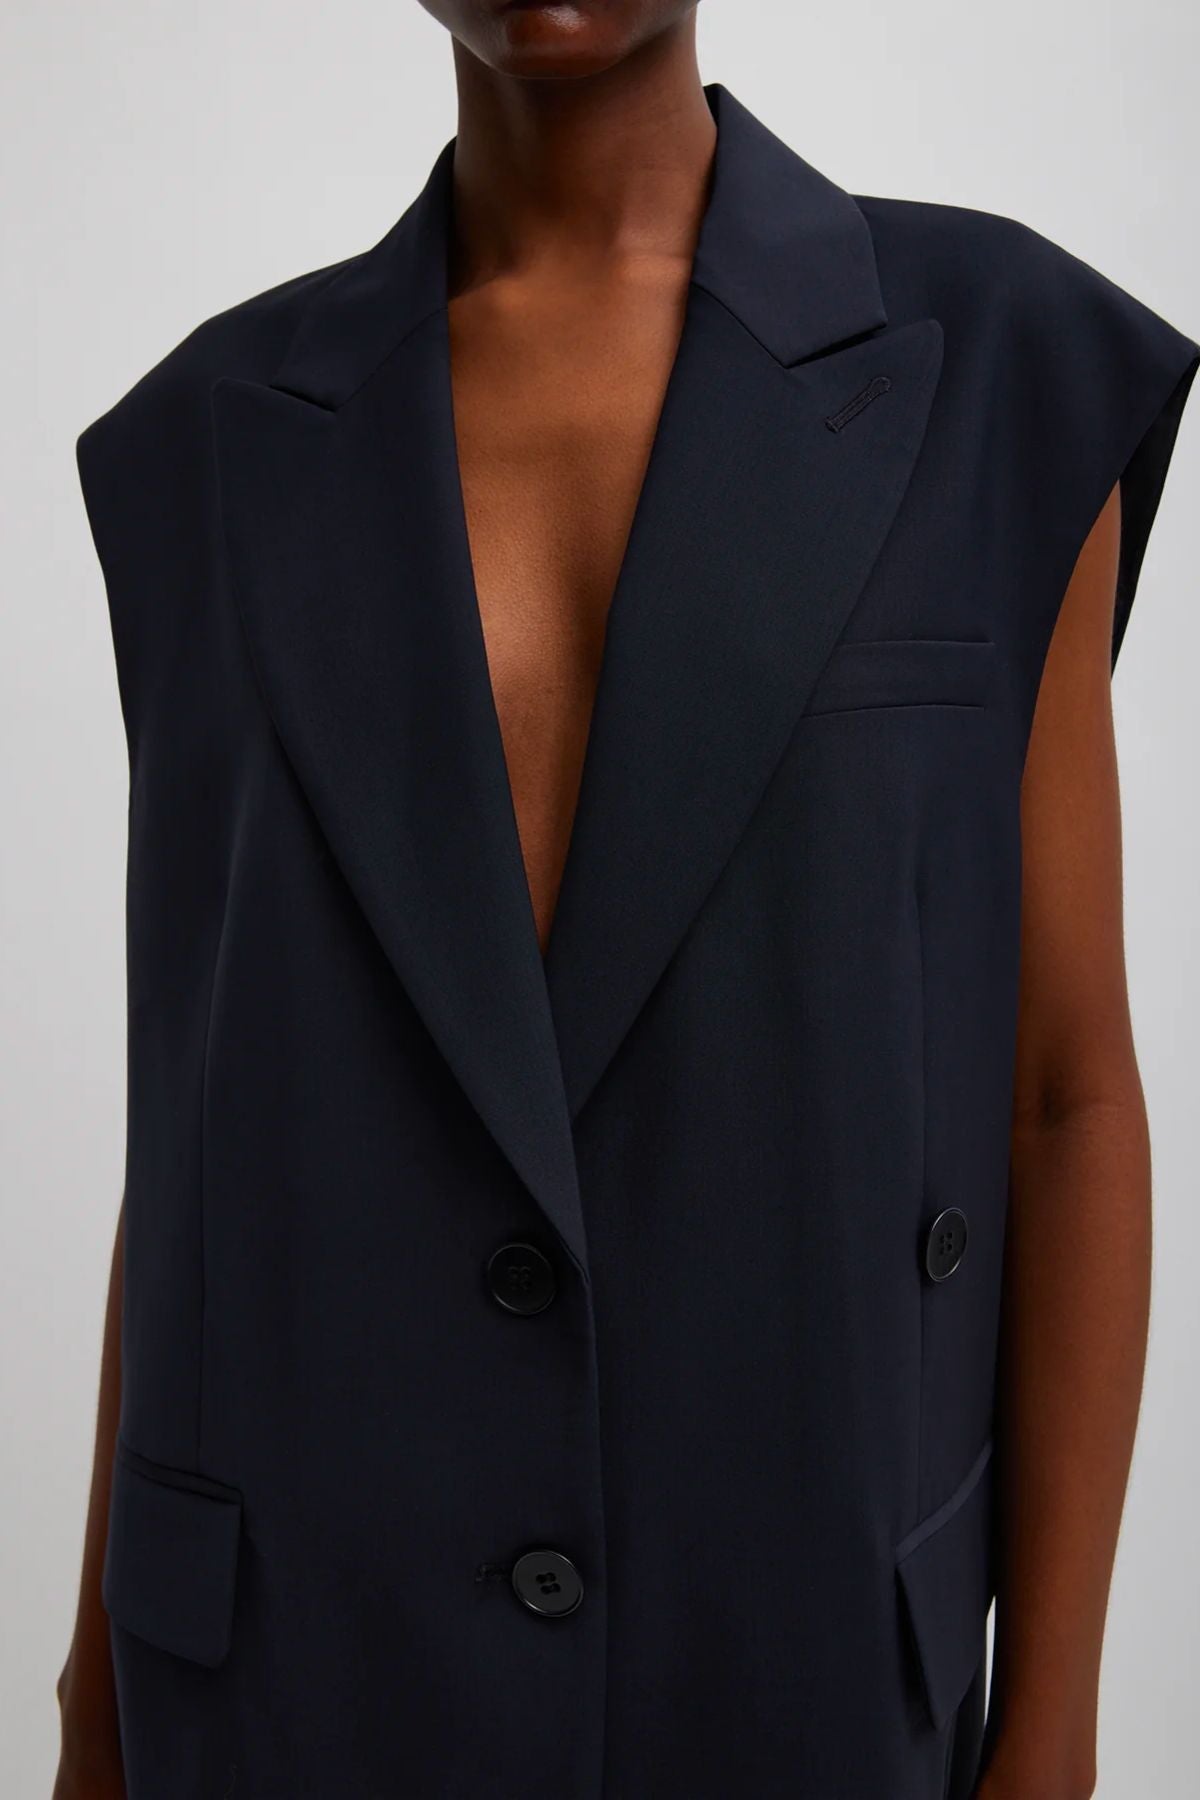 Tibi Tropical Wool Liam Vest - Black